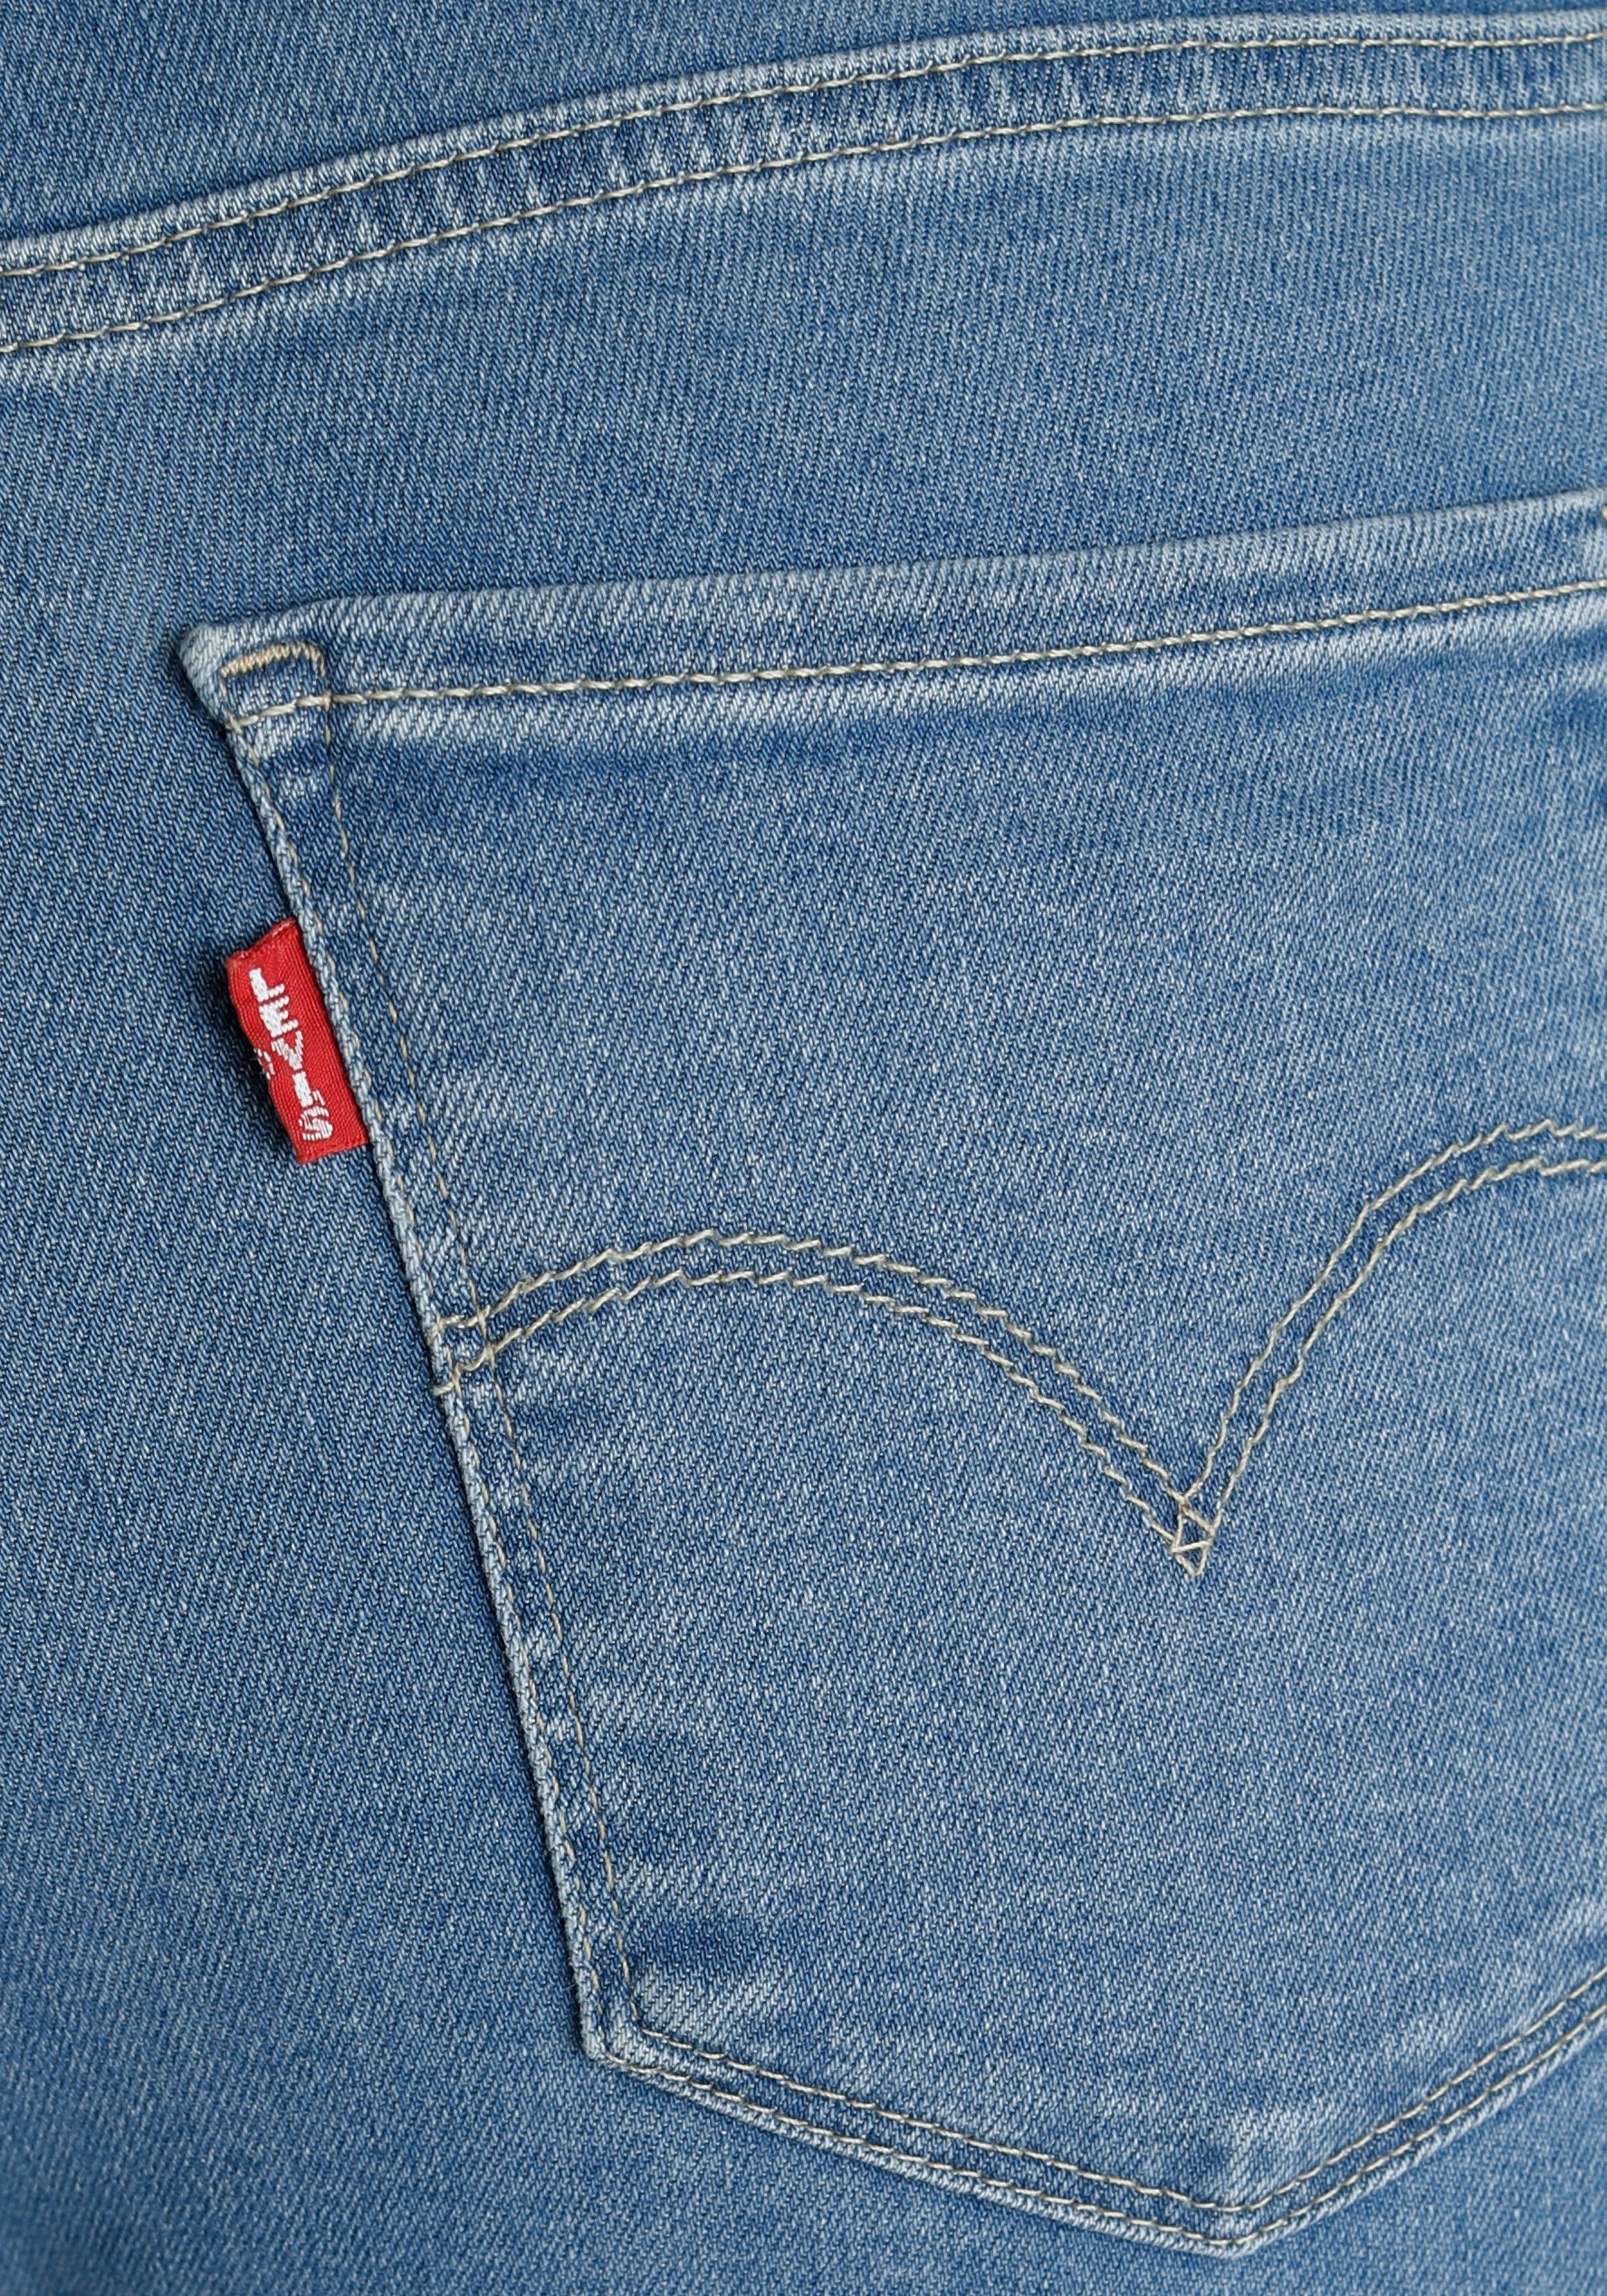 Plus 720 Skinny-fit-Jeans light hoher Levi's® Leibhöhe High-Rise indigo mit